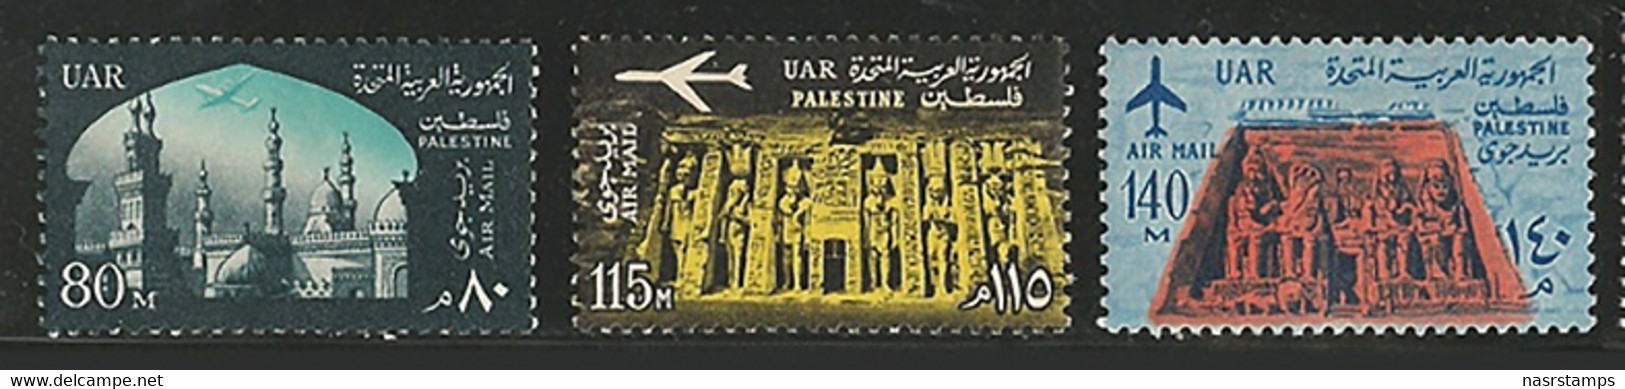 Egypt - 1963 - Palestine Issue - ( Temple Of Queen Nefertari, Abu Simbel ) - MNH (**) - Egyptology